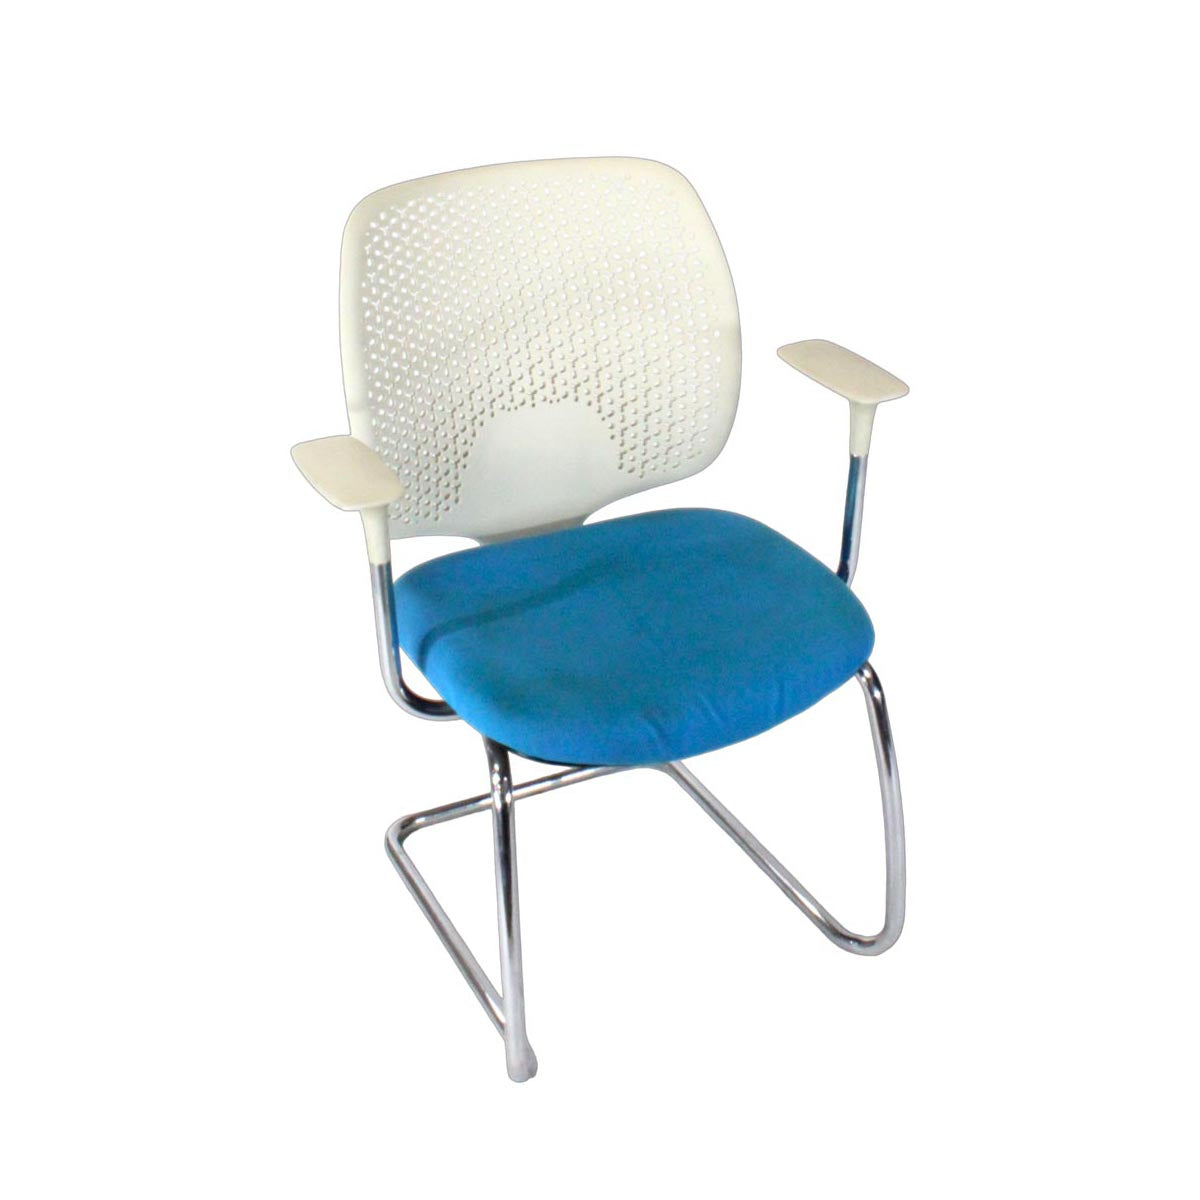 Orangebox: Ara Task Chair in White/Blue - Refurbished